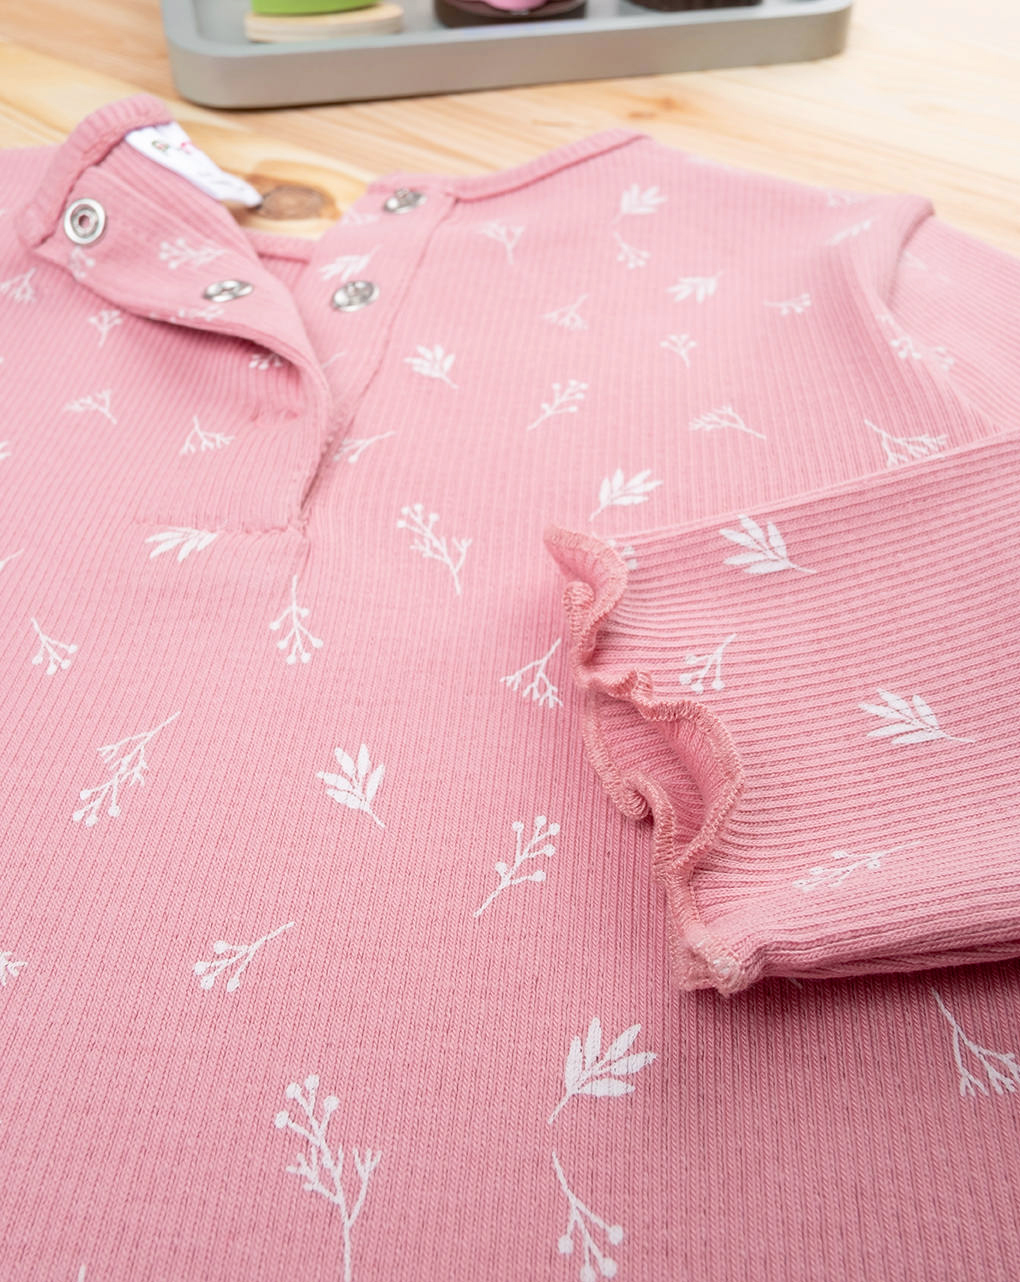 Camiseta niña rosa - Prénatal